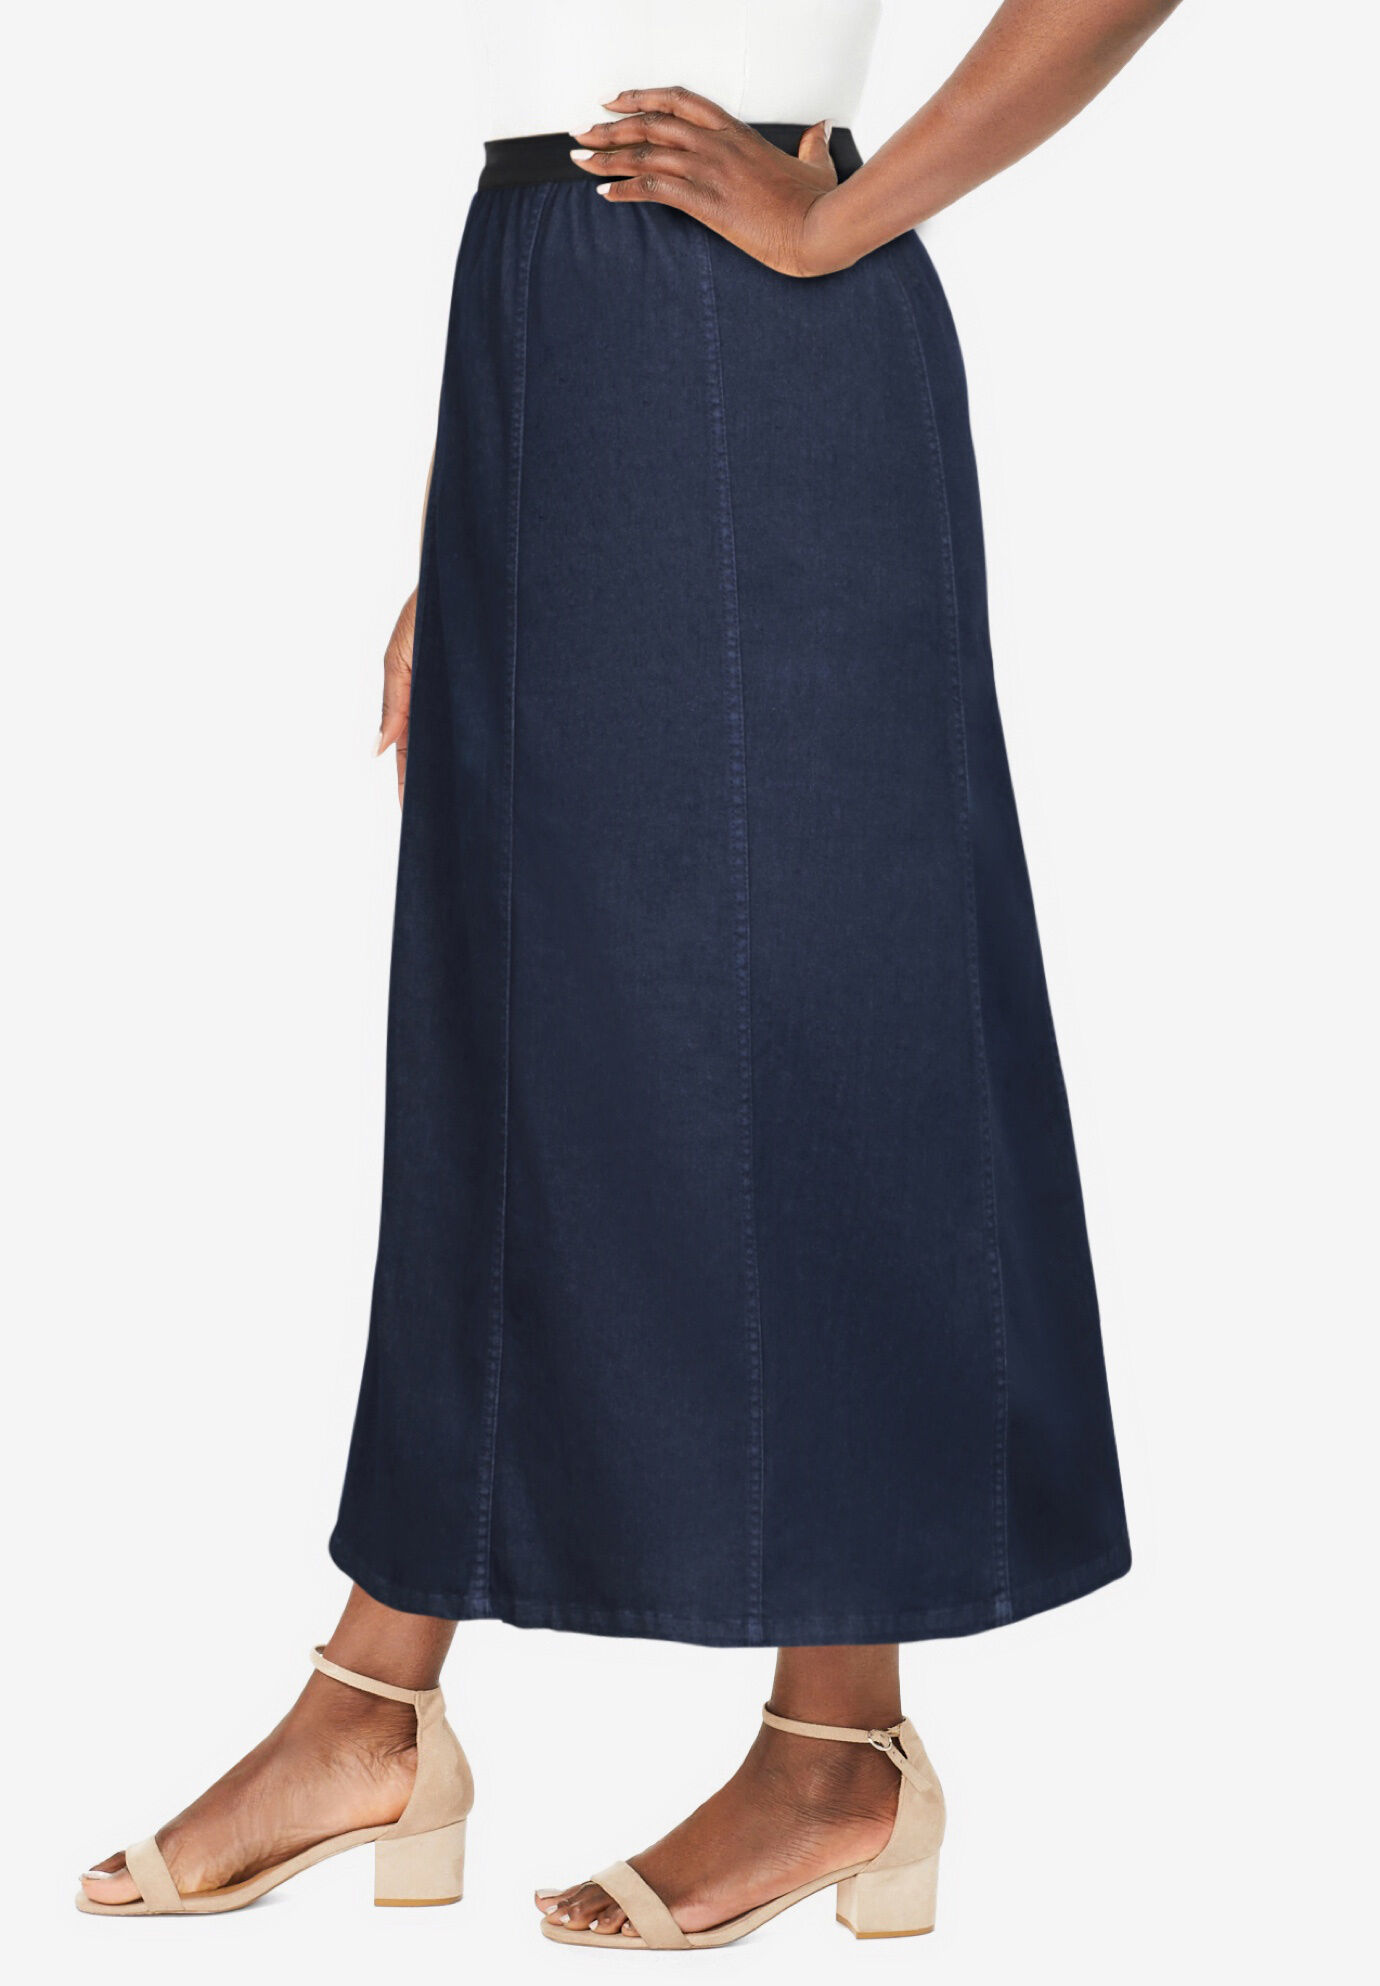 jessica london jean skirts